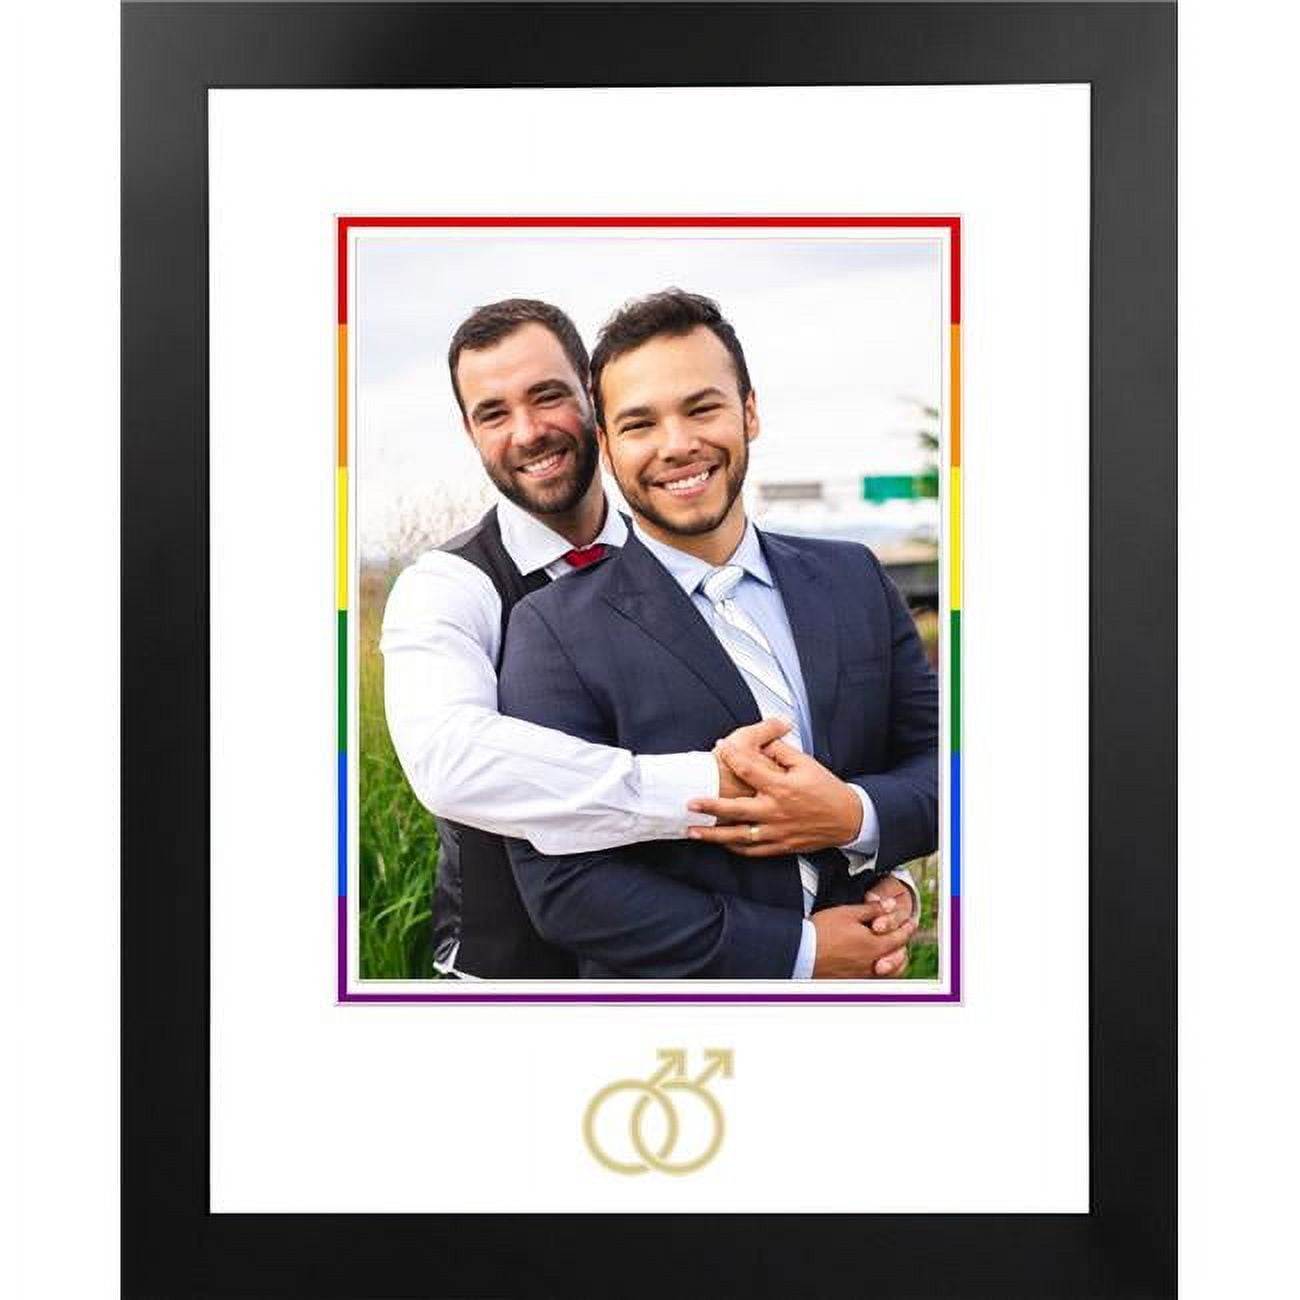 Pmsswg03 8 X 10 In. Lgbtq Pride Wedding Portrait Frame With White & Rainbow Mat - Gold Interlocking Man